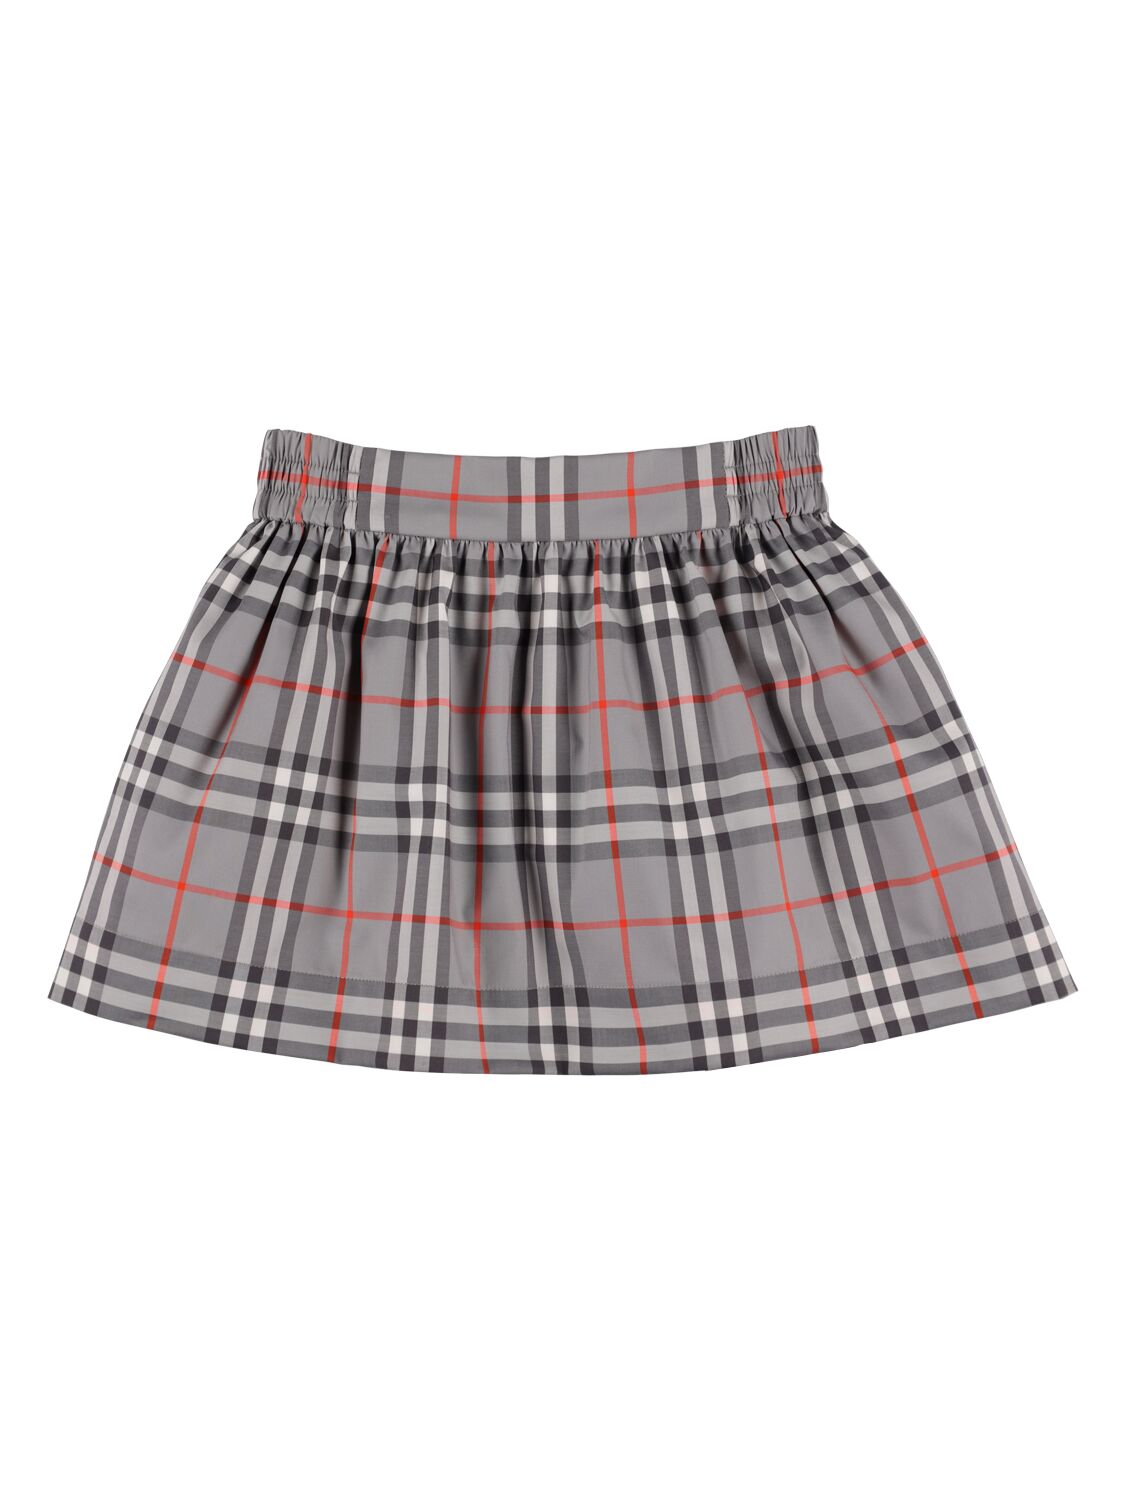 Image of Check Print Cotton Blend Skirt